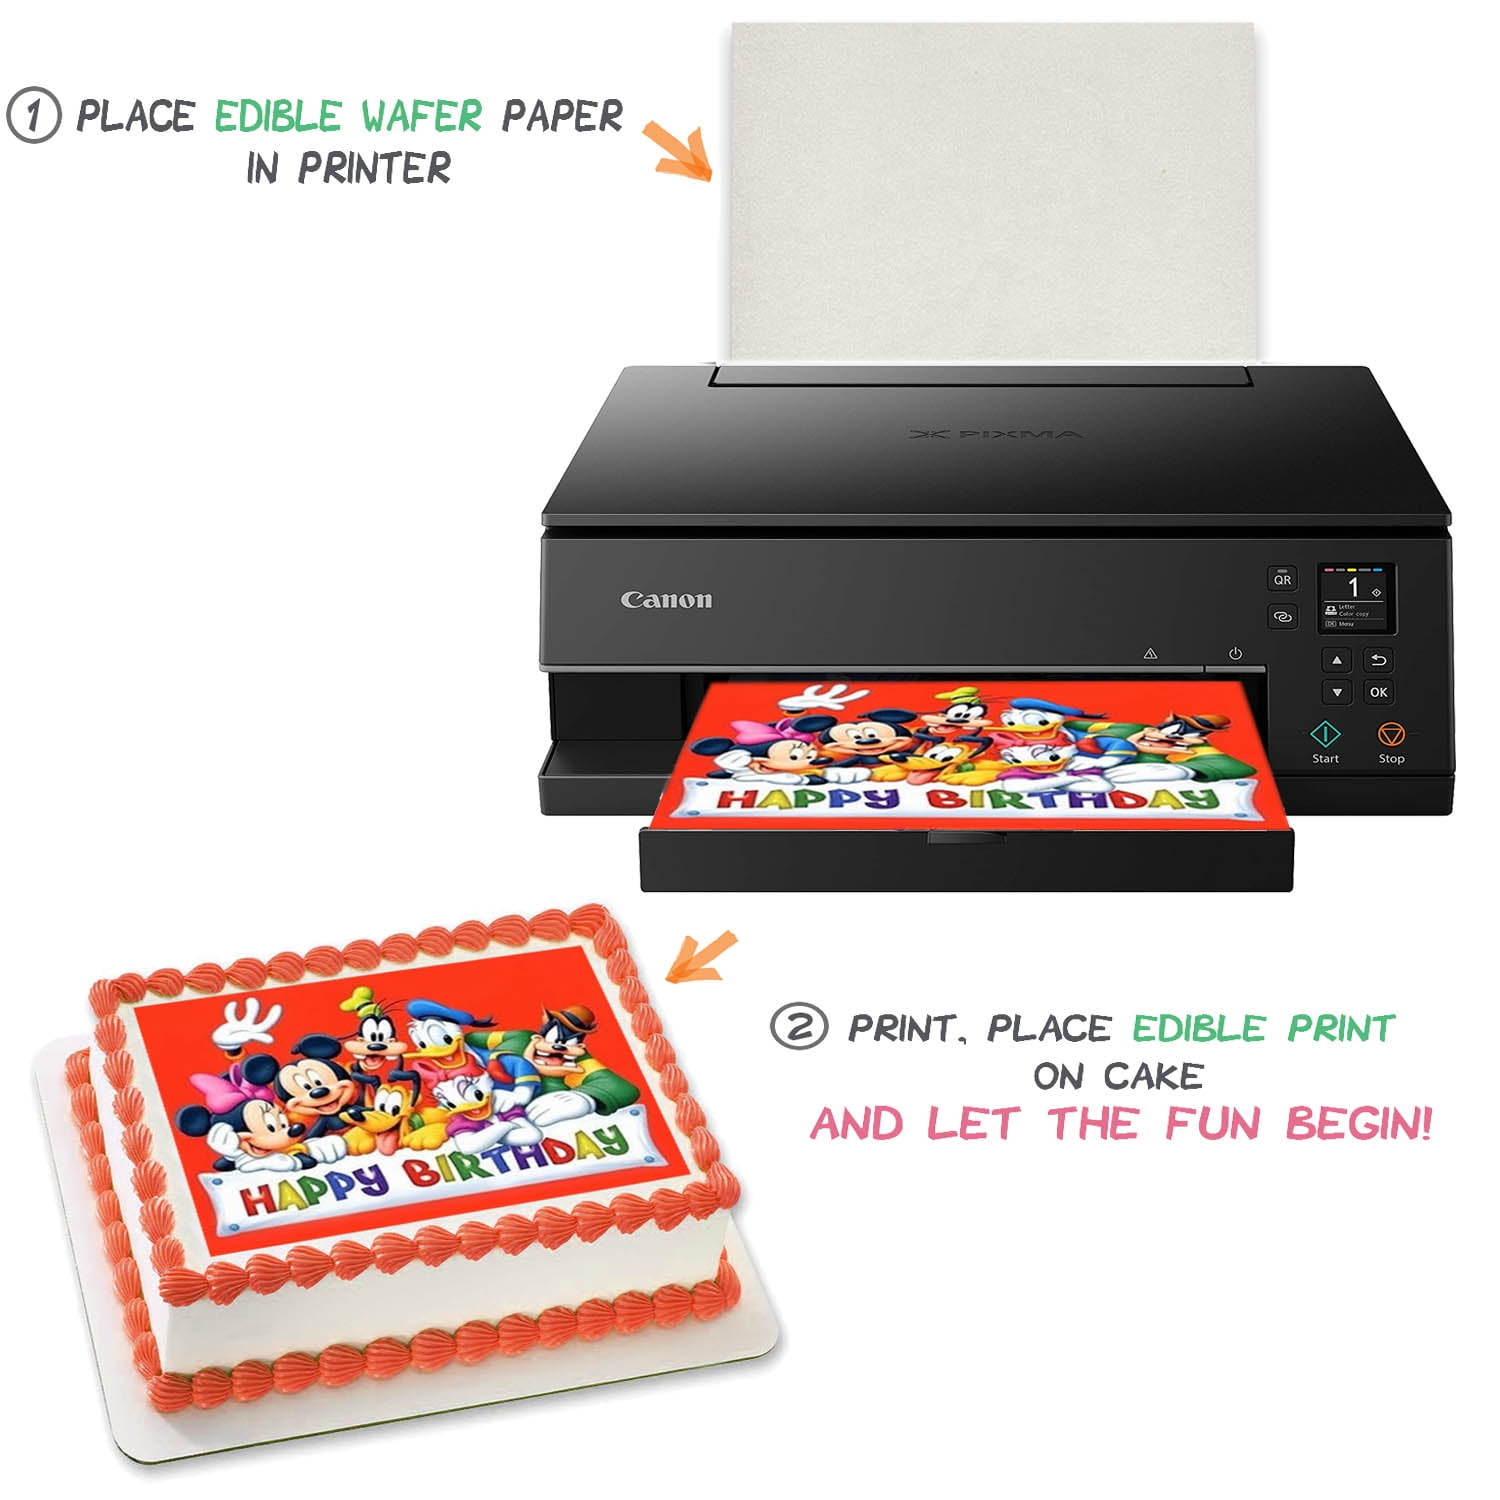 Herofiber Edible Cake Printers Series. Canon New Model Wireless Edible Printer Bakery Bundle 100 Edible Wafer Paper Sheets Includes Complete Set of Edible Ink 